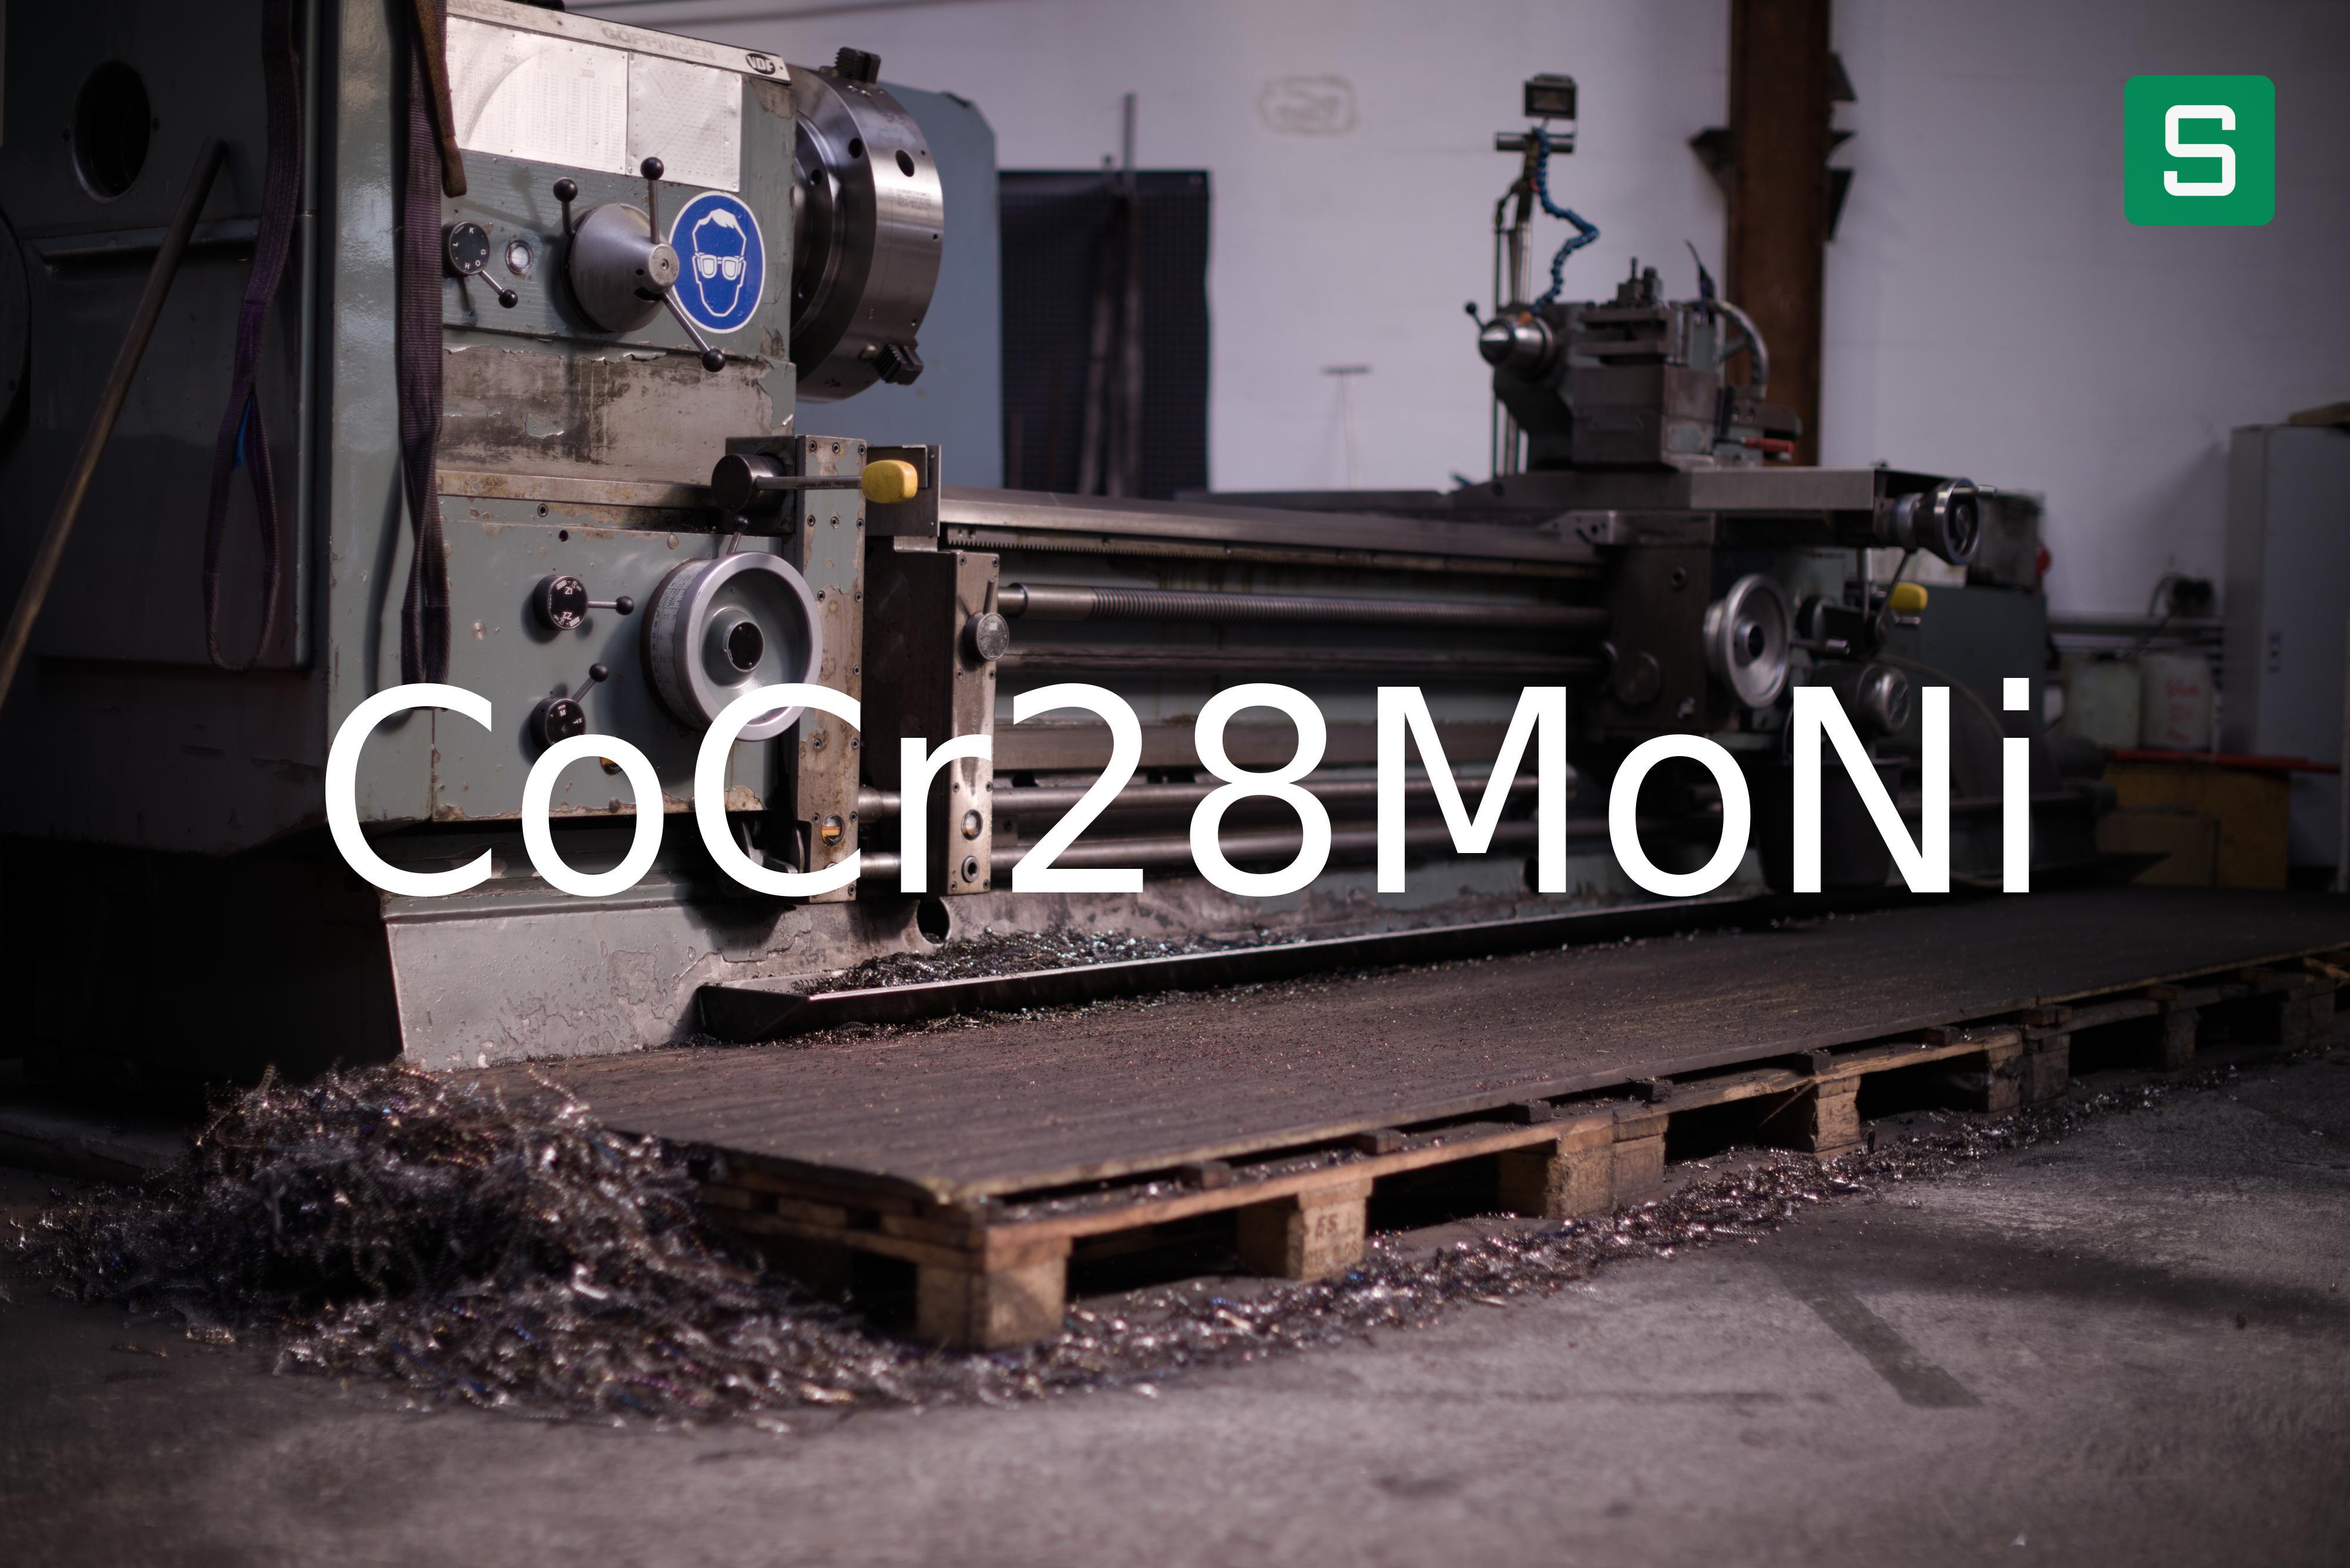 Steel Material: CoCr28MoNi